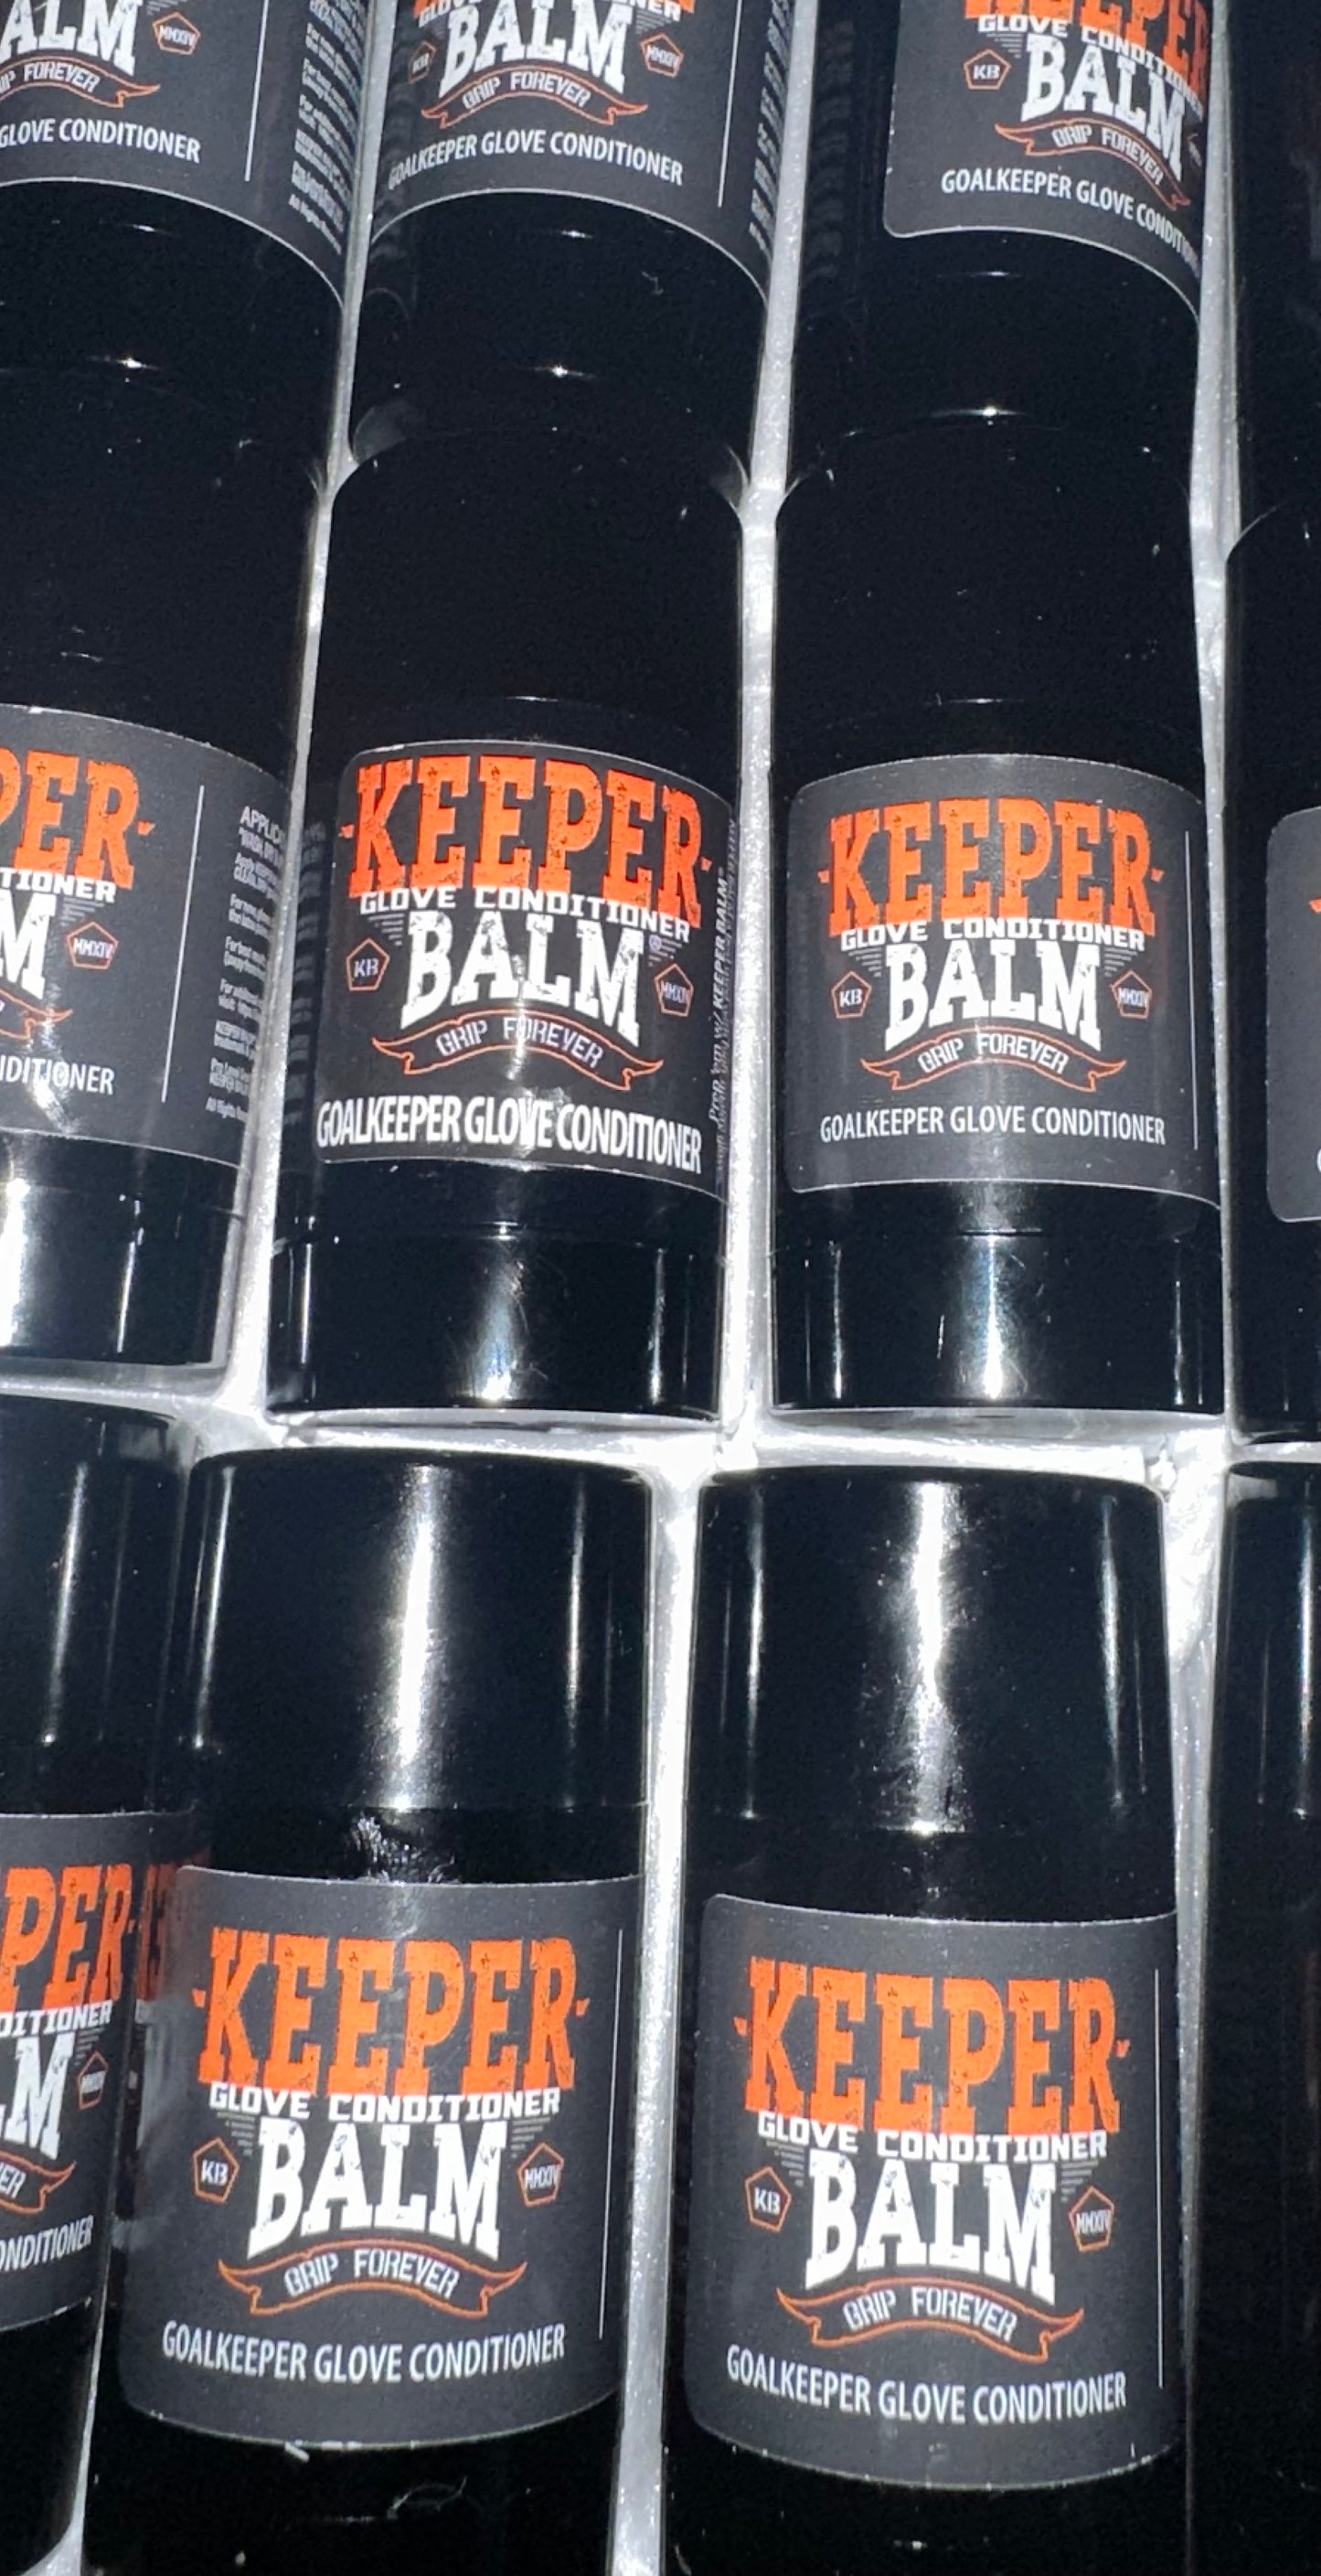 KEEPER BALM® - Goalkeeper Glove Conditioner